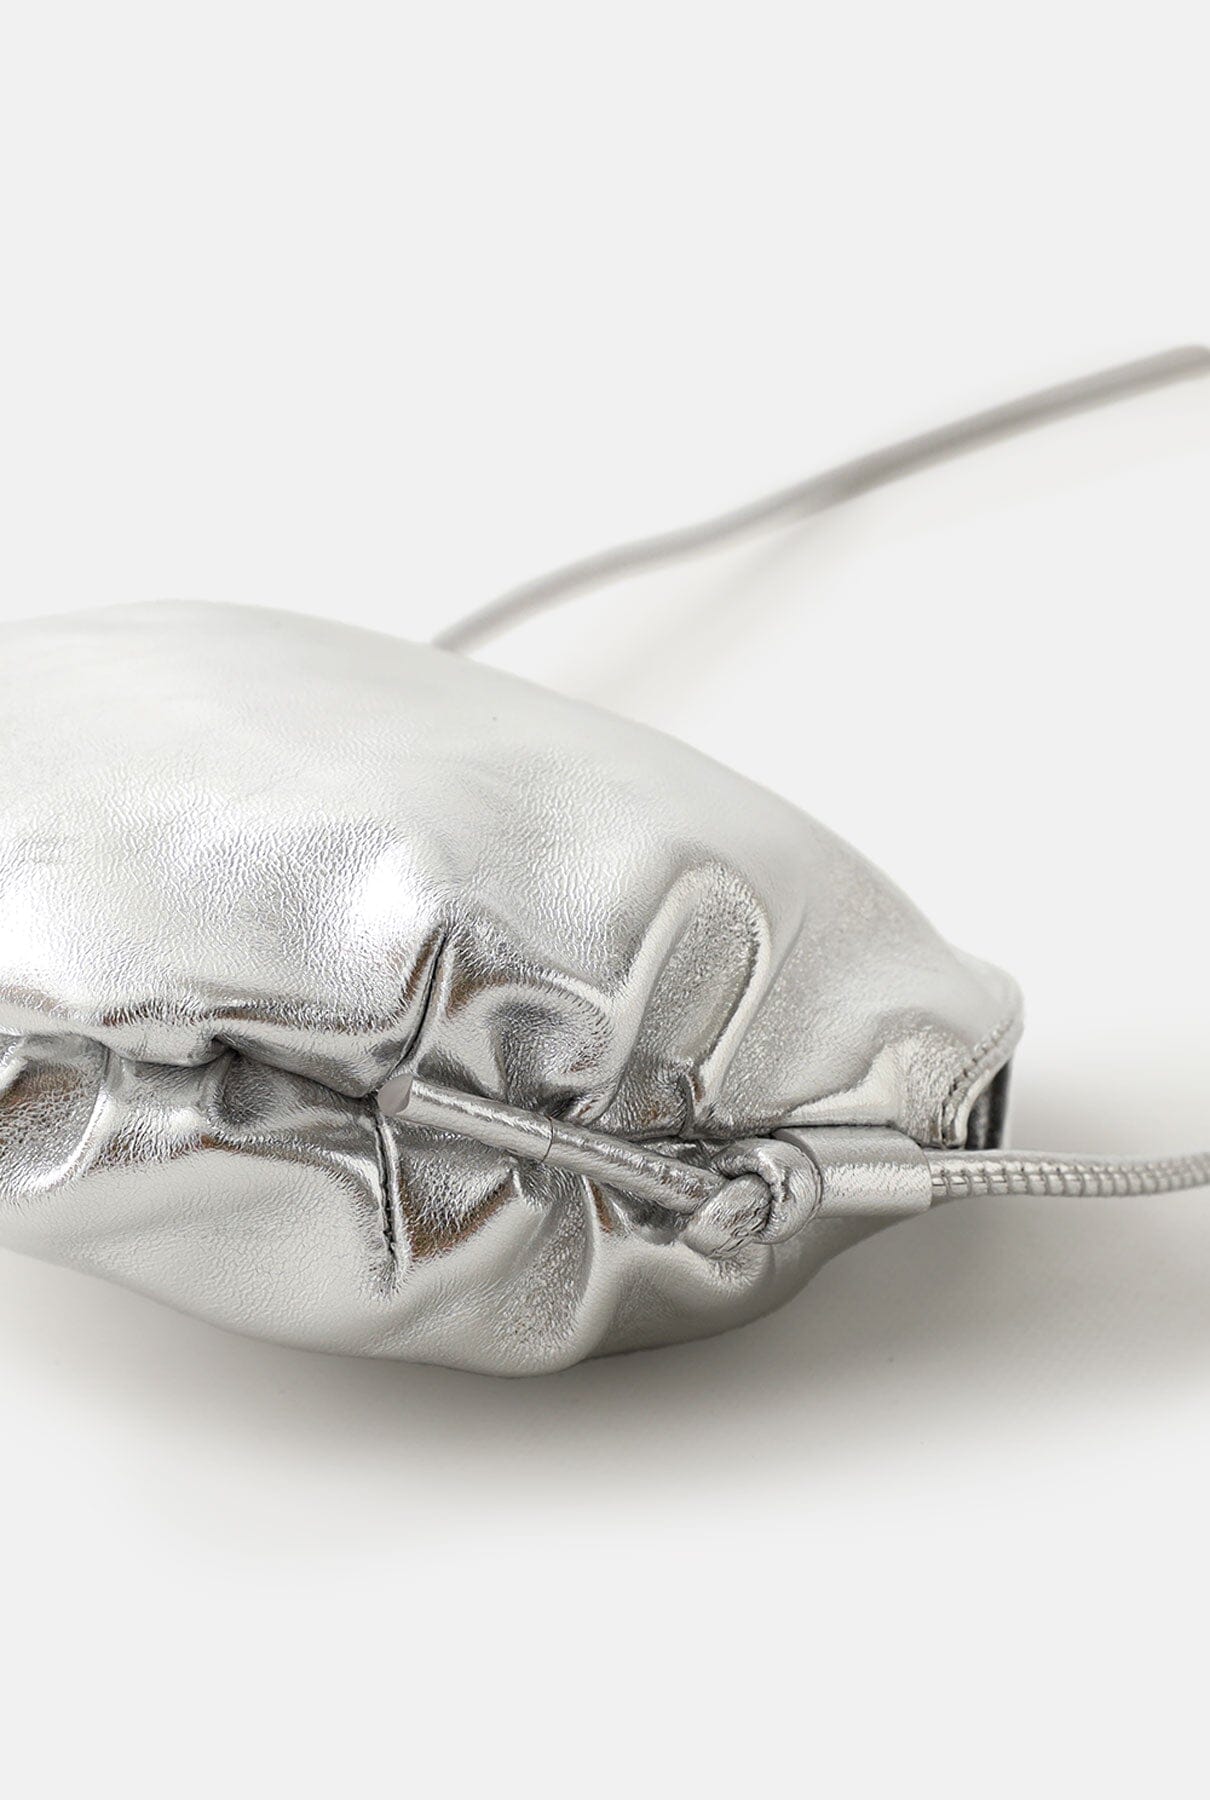 Shell Bag Silver Crossbody bags The Villã Concept 